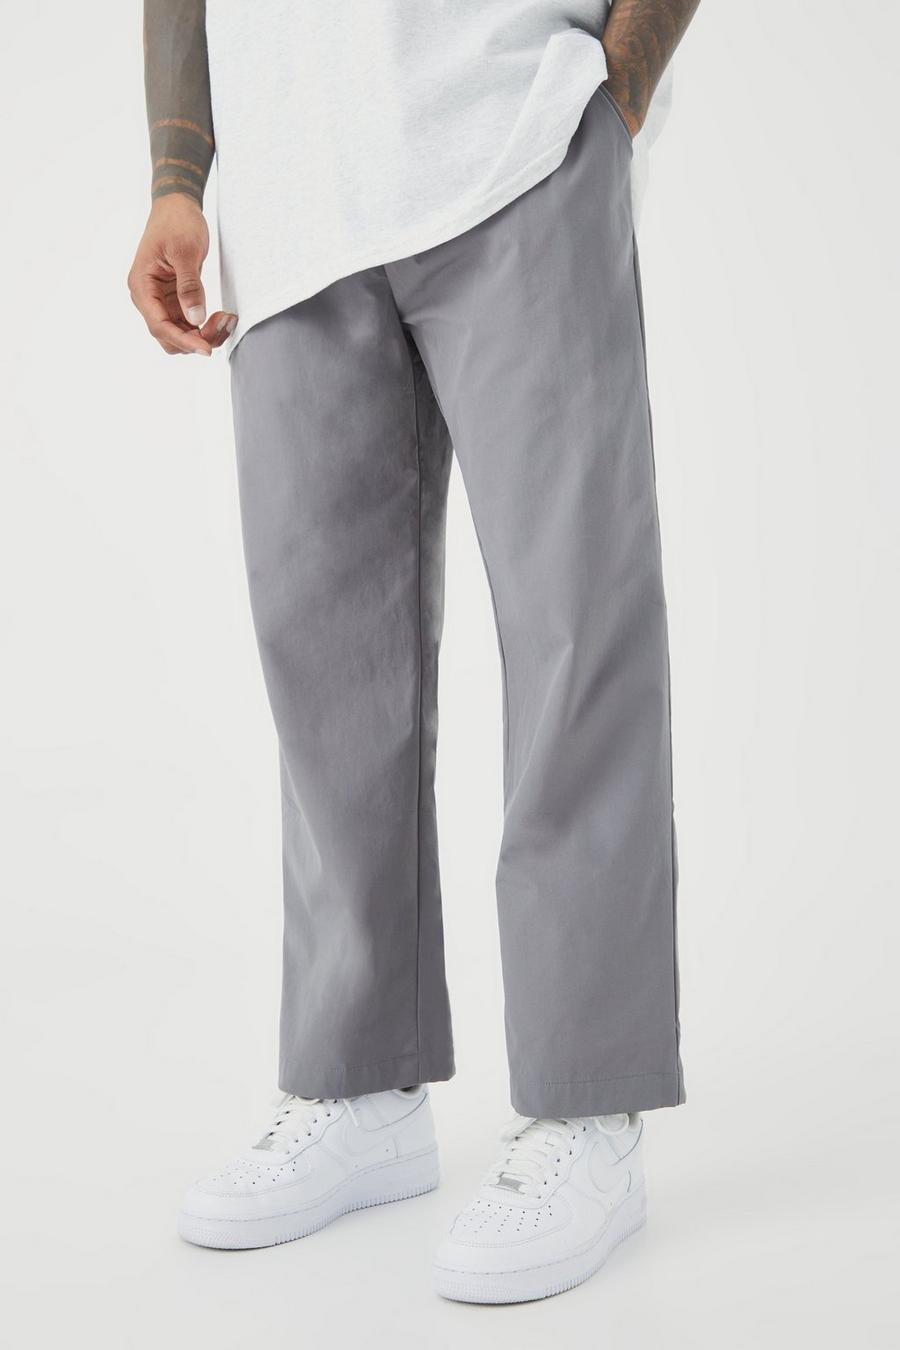 Pantaloni rilassati in Stretch tecnico, Charcoal gris